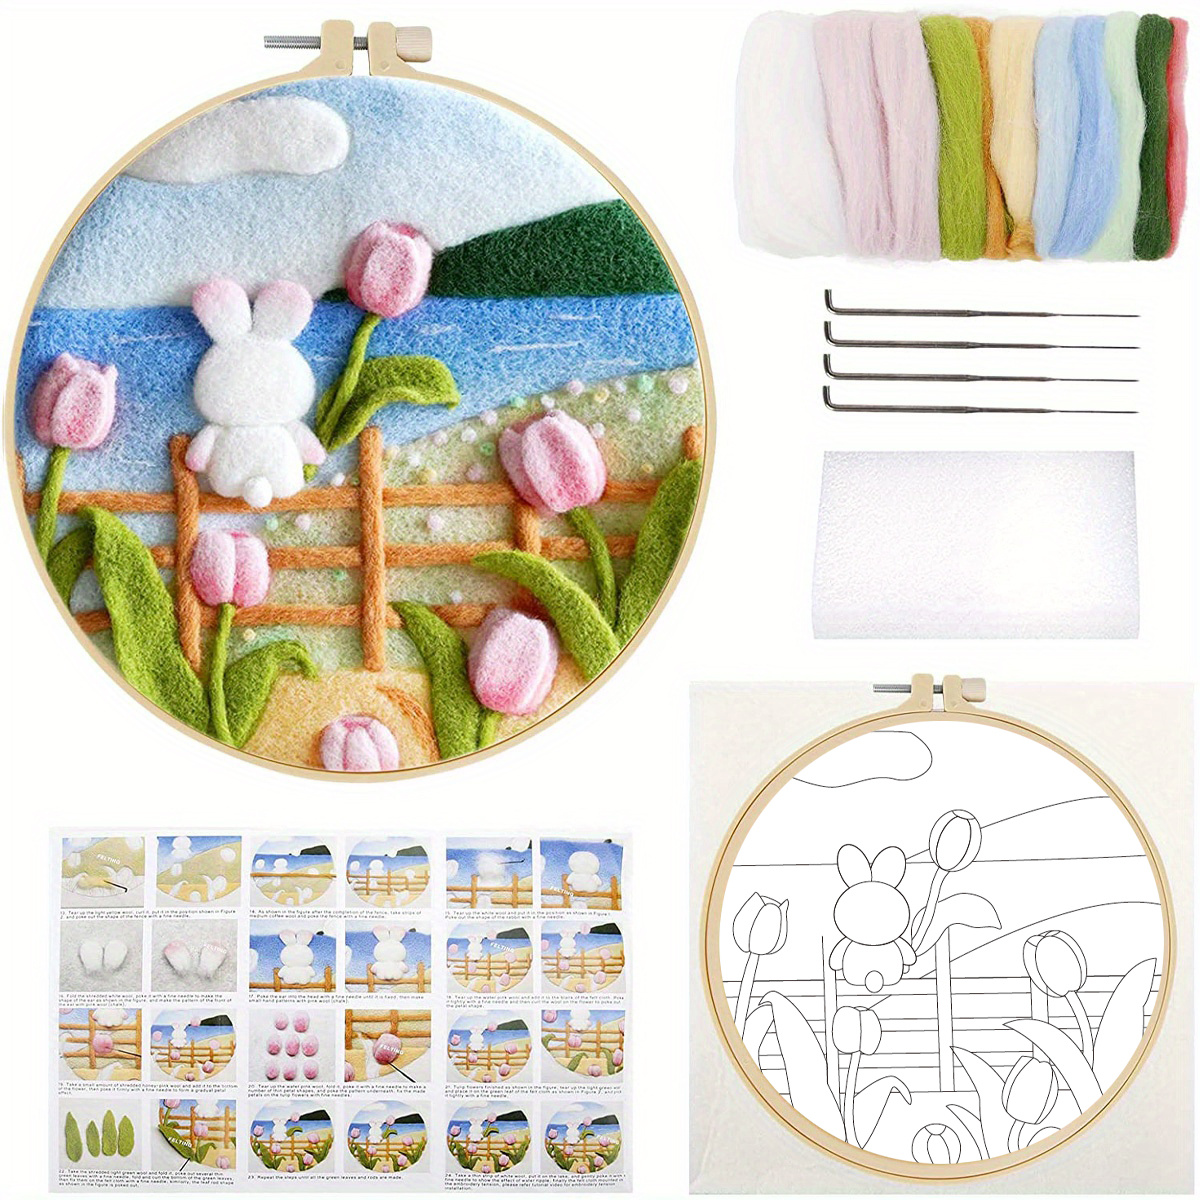 The Crafty Kit Company - Floral Bunny in A Hoop Needle Felt Kit